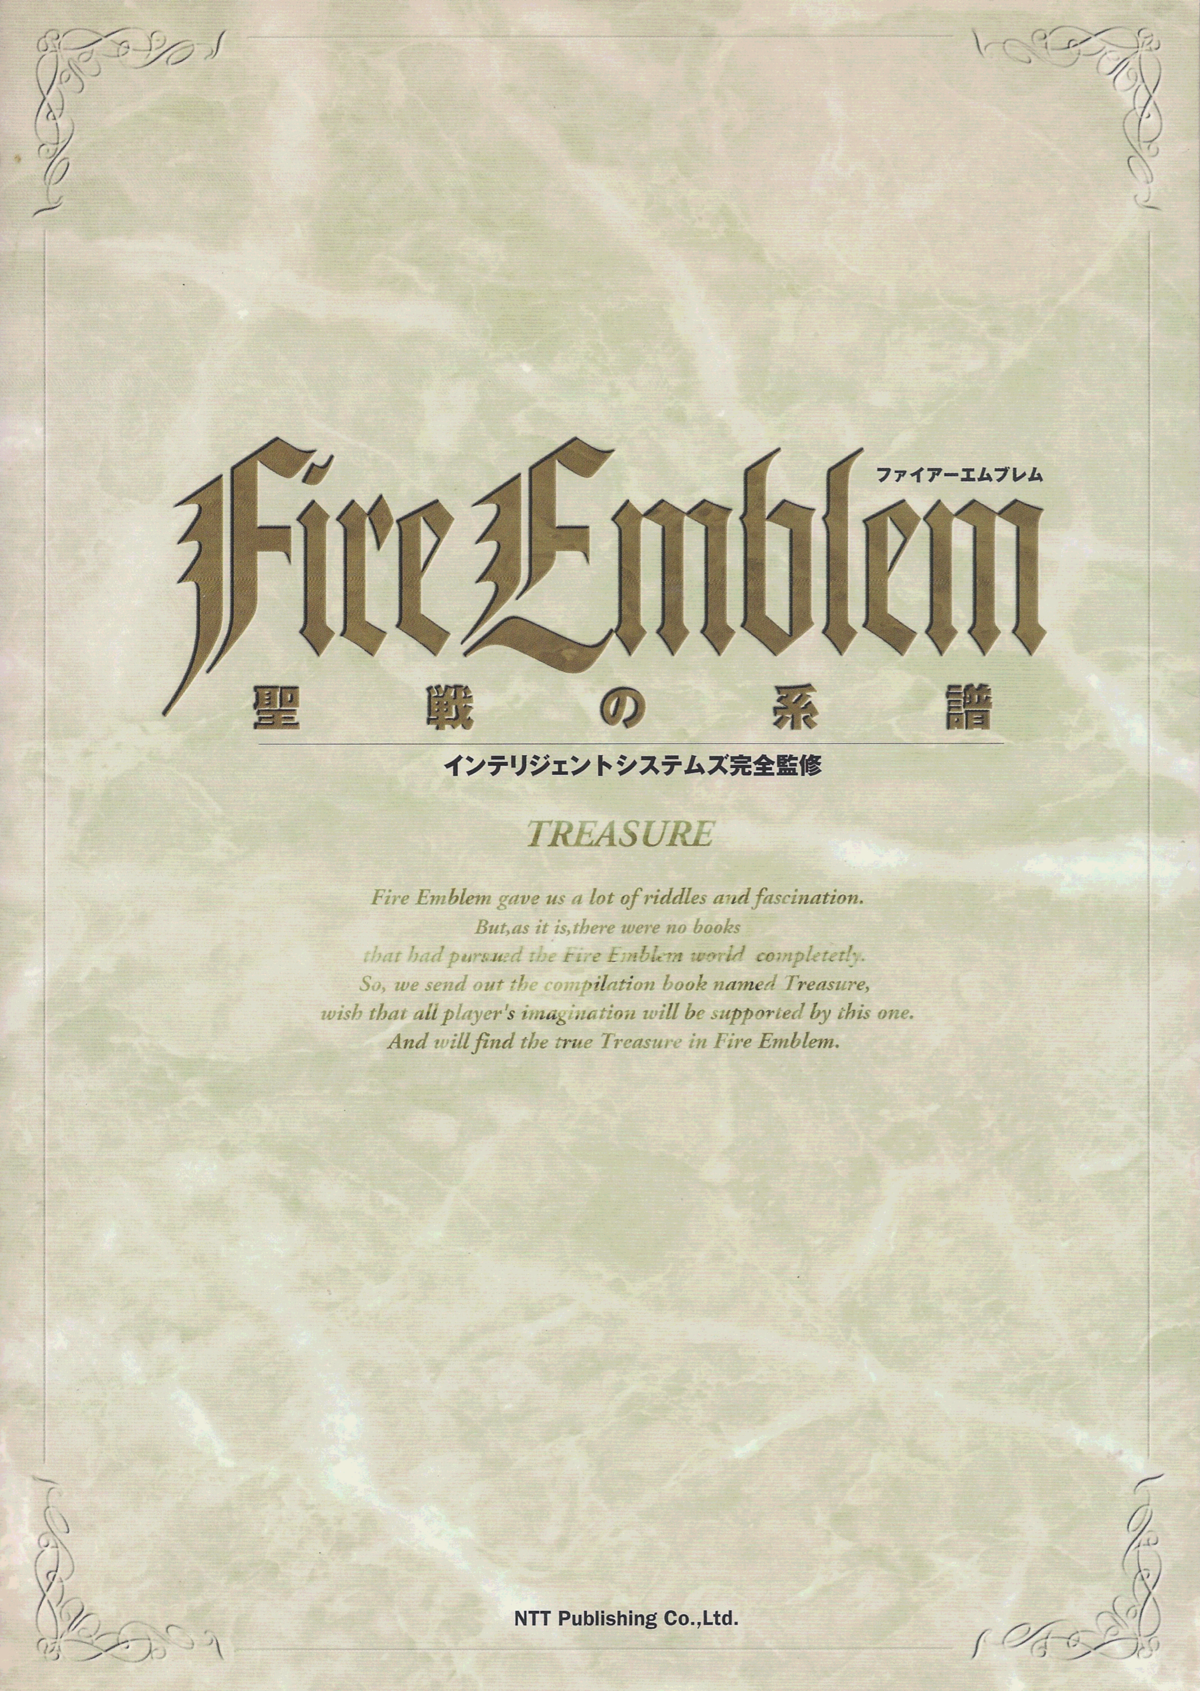 Fire Emblem: Treasure - Fire Emblem Wiki